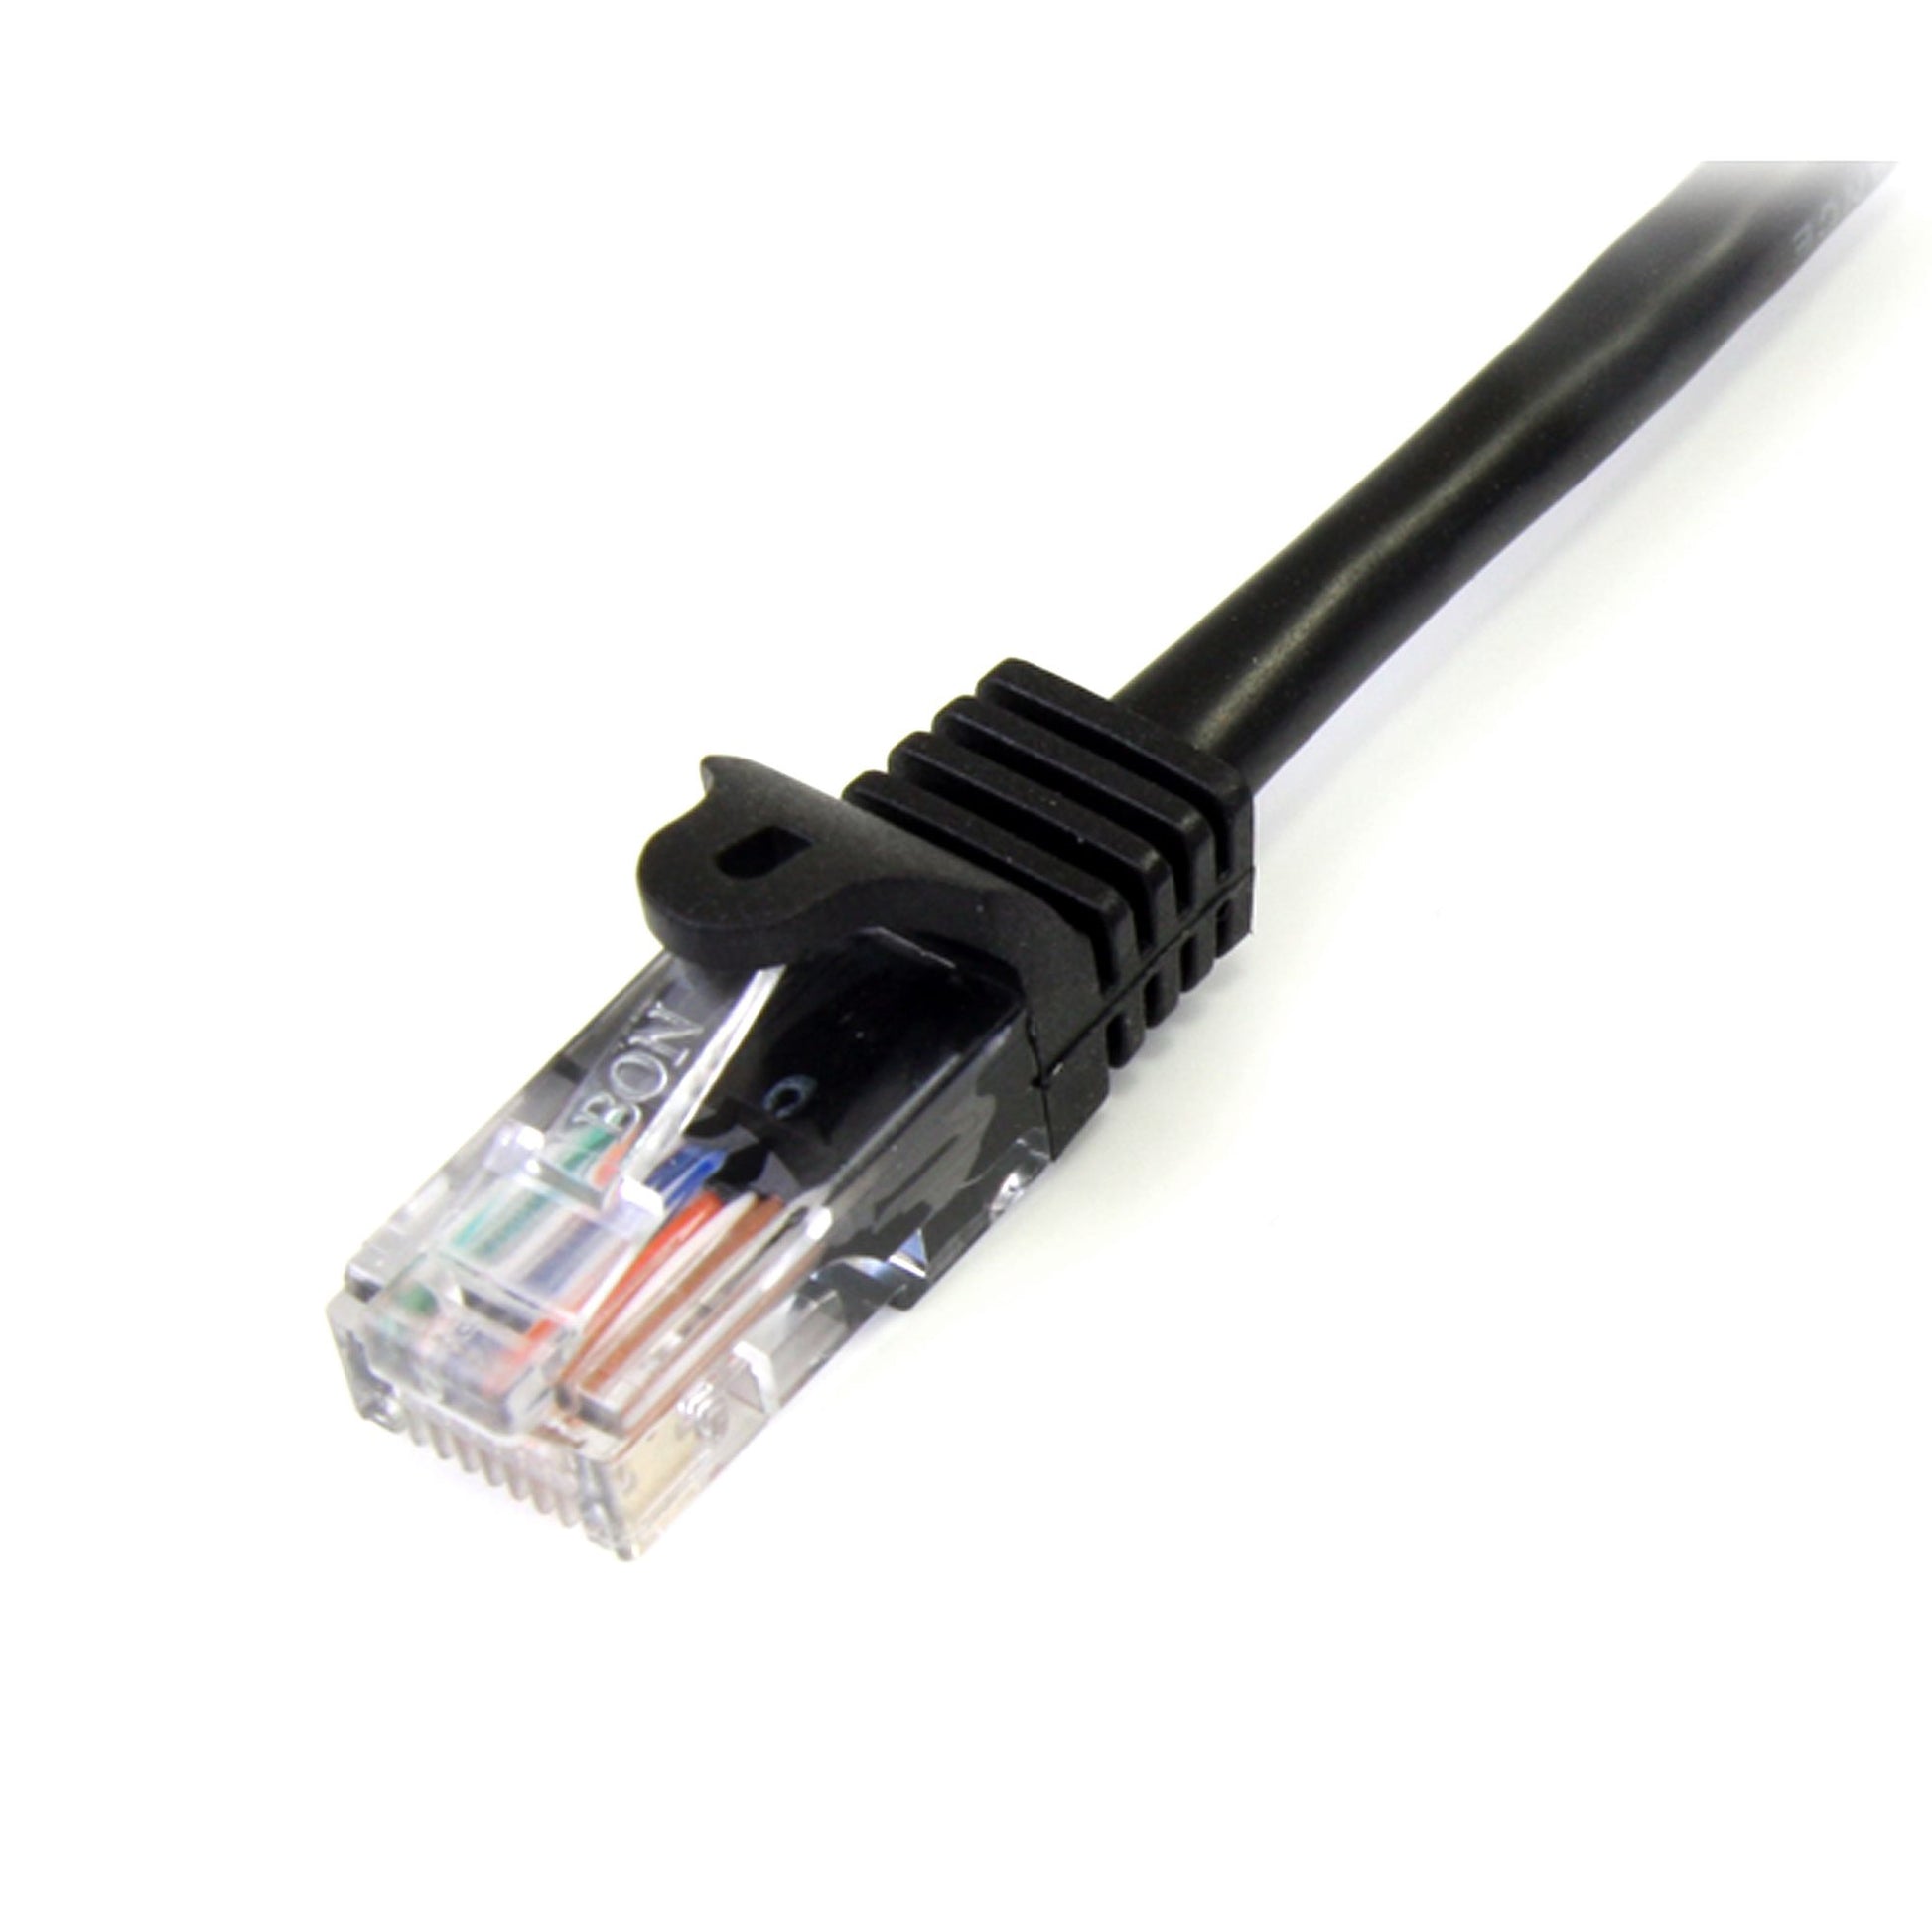 StarTech.com Cat5e Patch Cable with Snagless RJ45 Connectors - 1m, Black-1